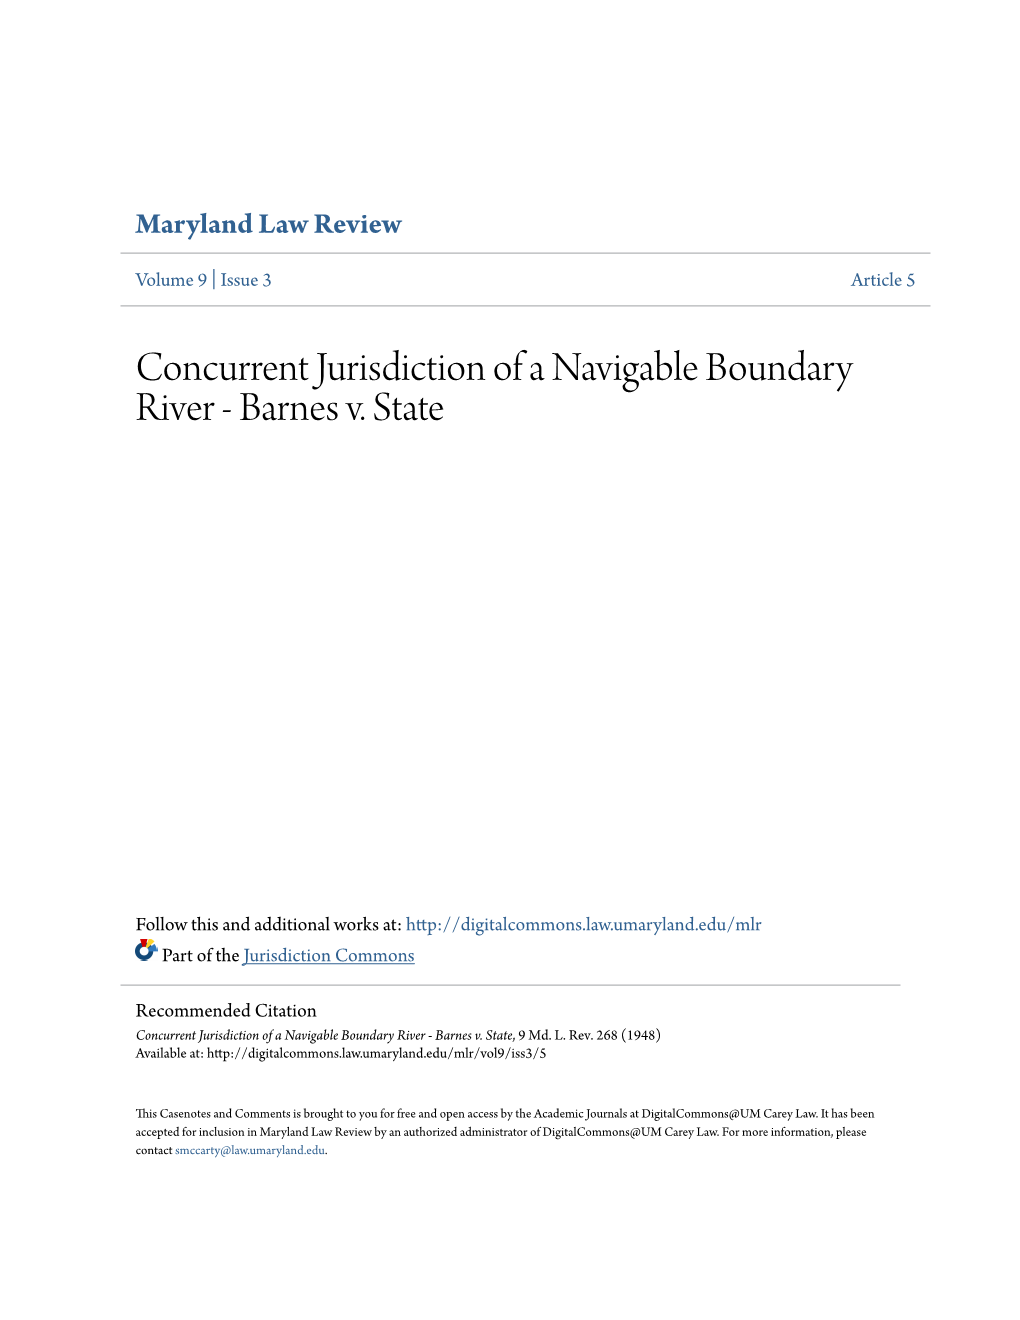 Concurrent Jurisdiction of a Navigable Boundary River - Barnes V